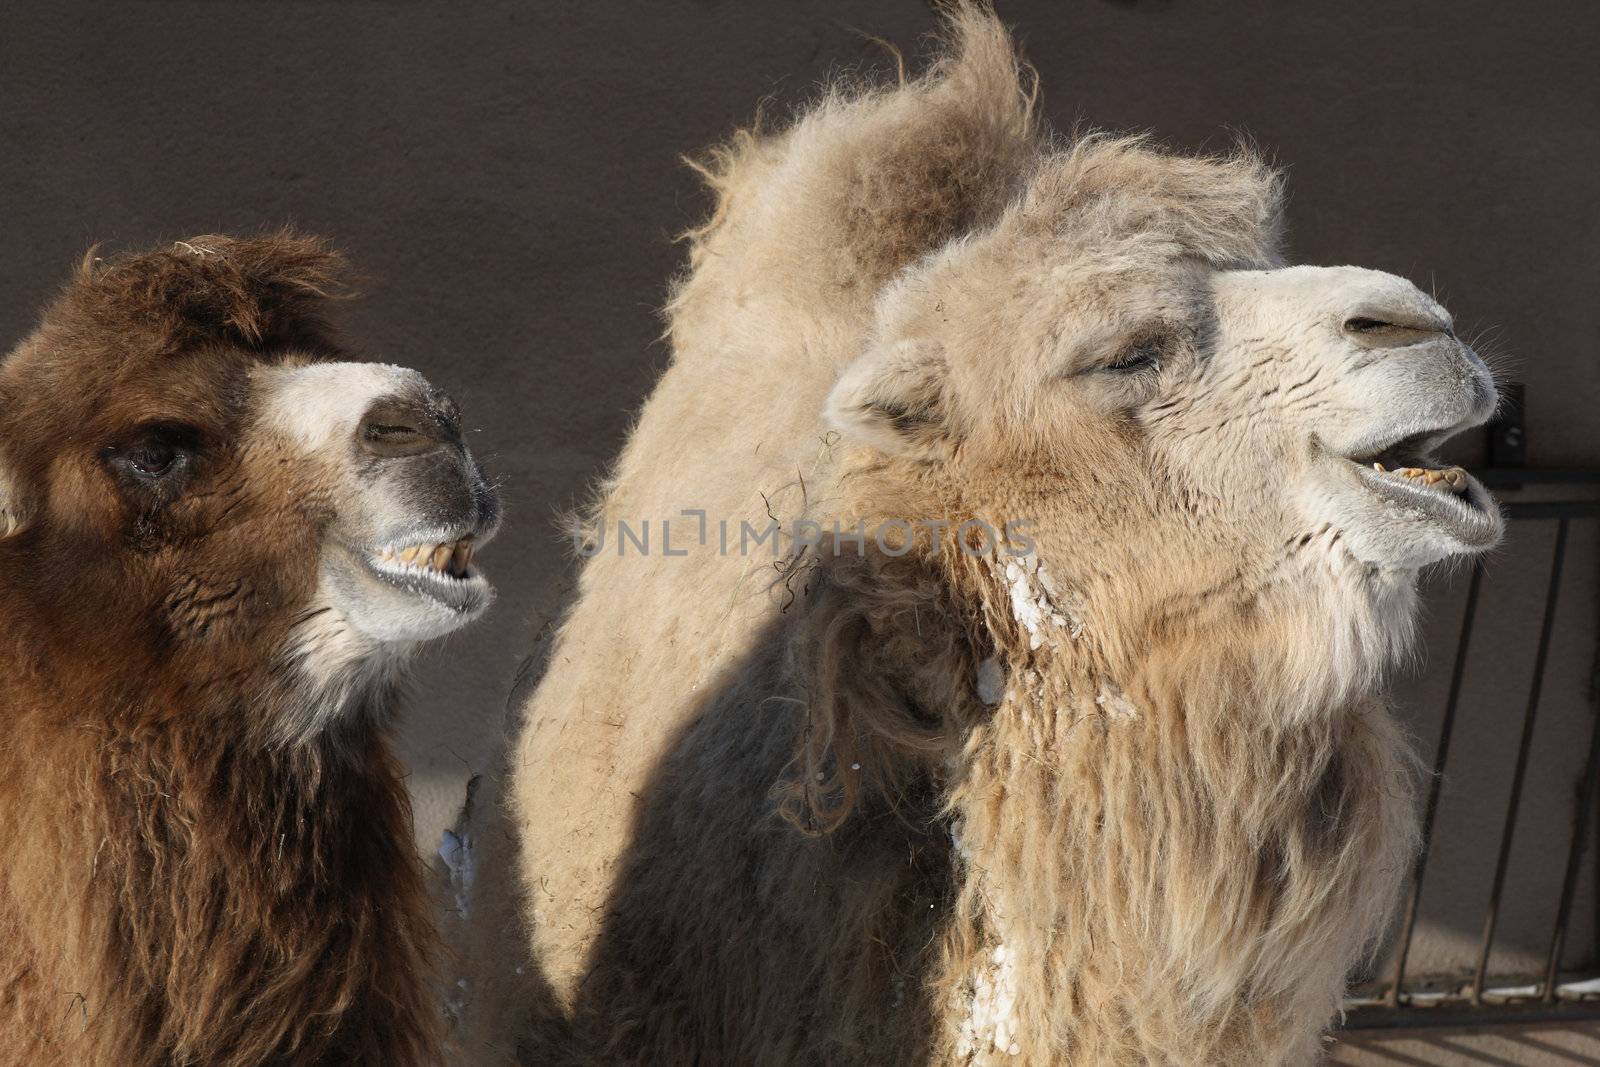 Two Camels by kvkirillov